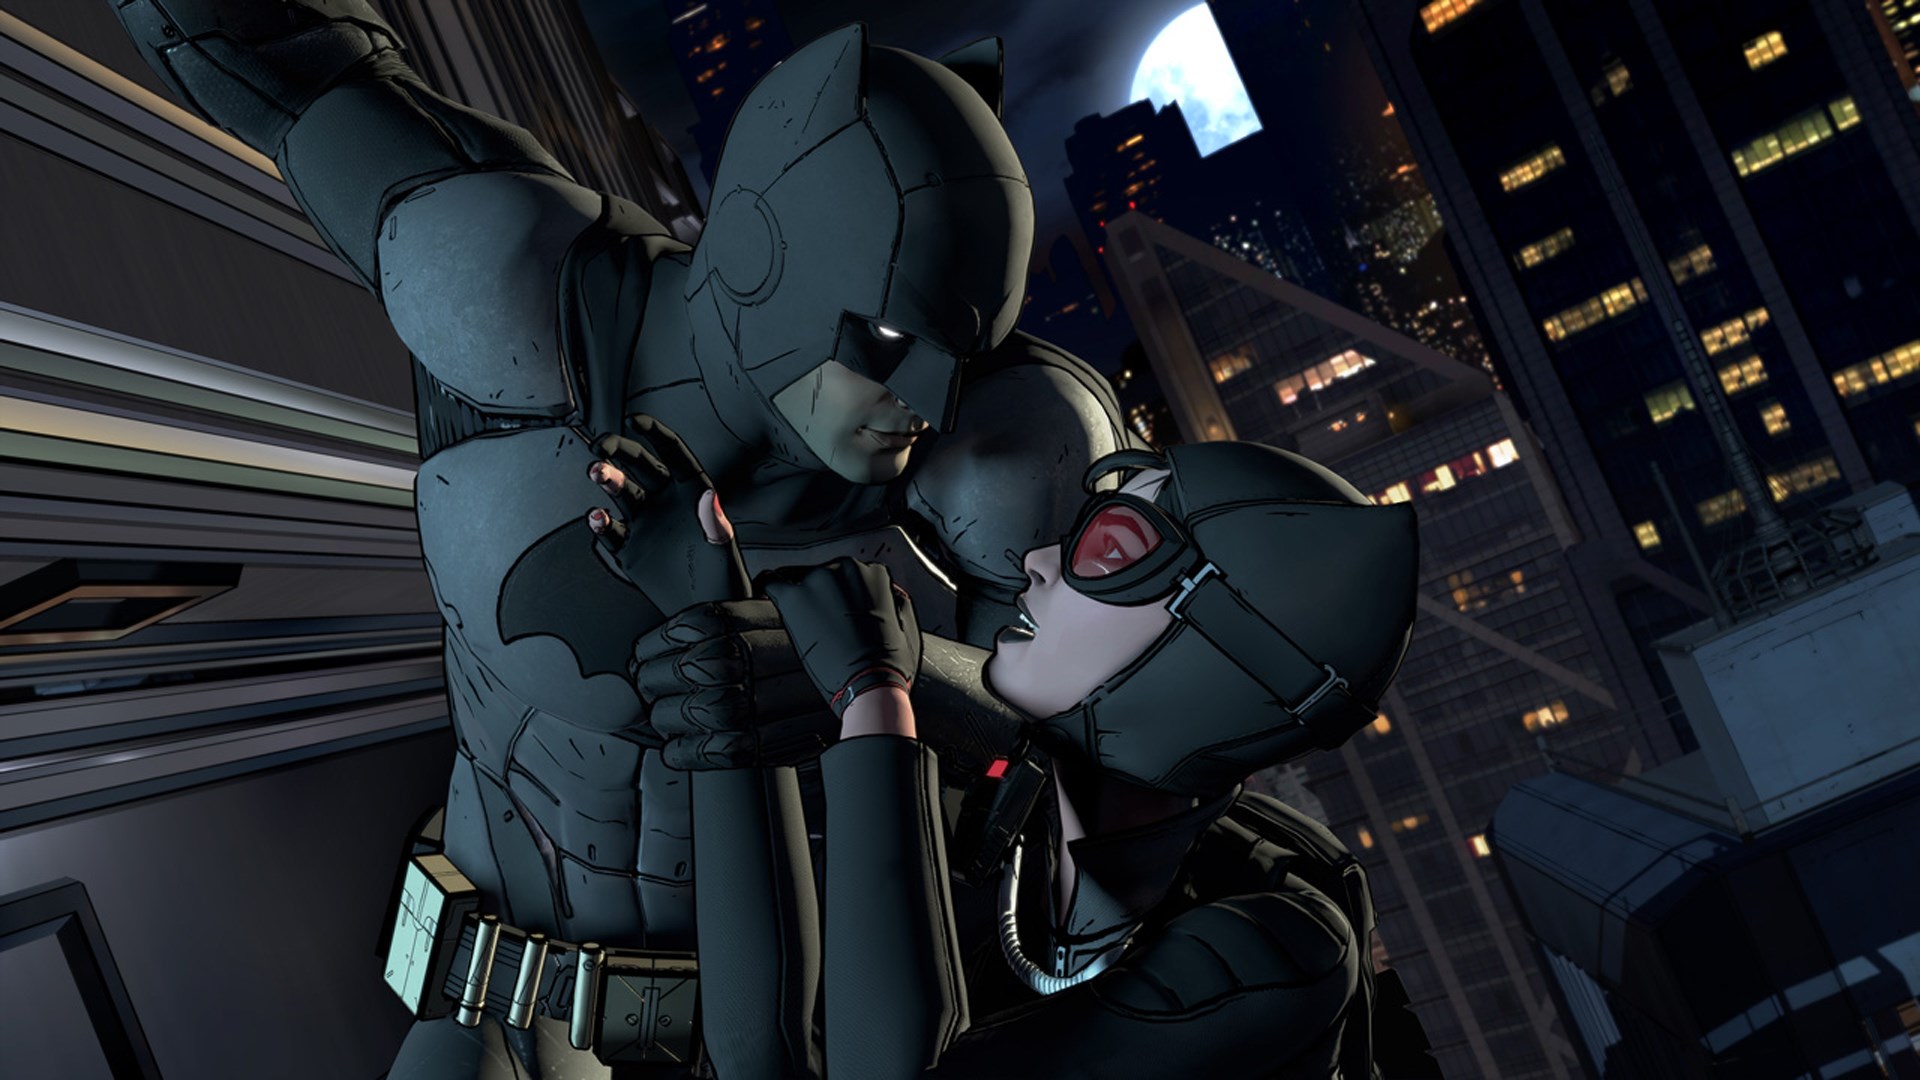 Batman: The Telltale Series – The Complete Season